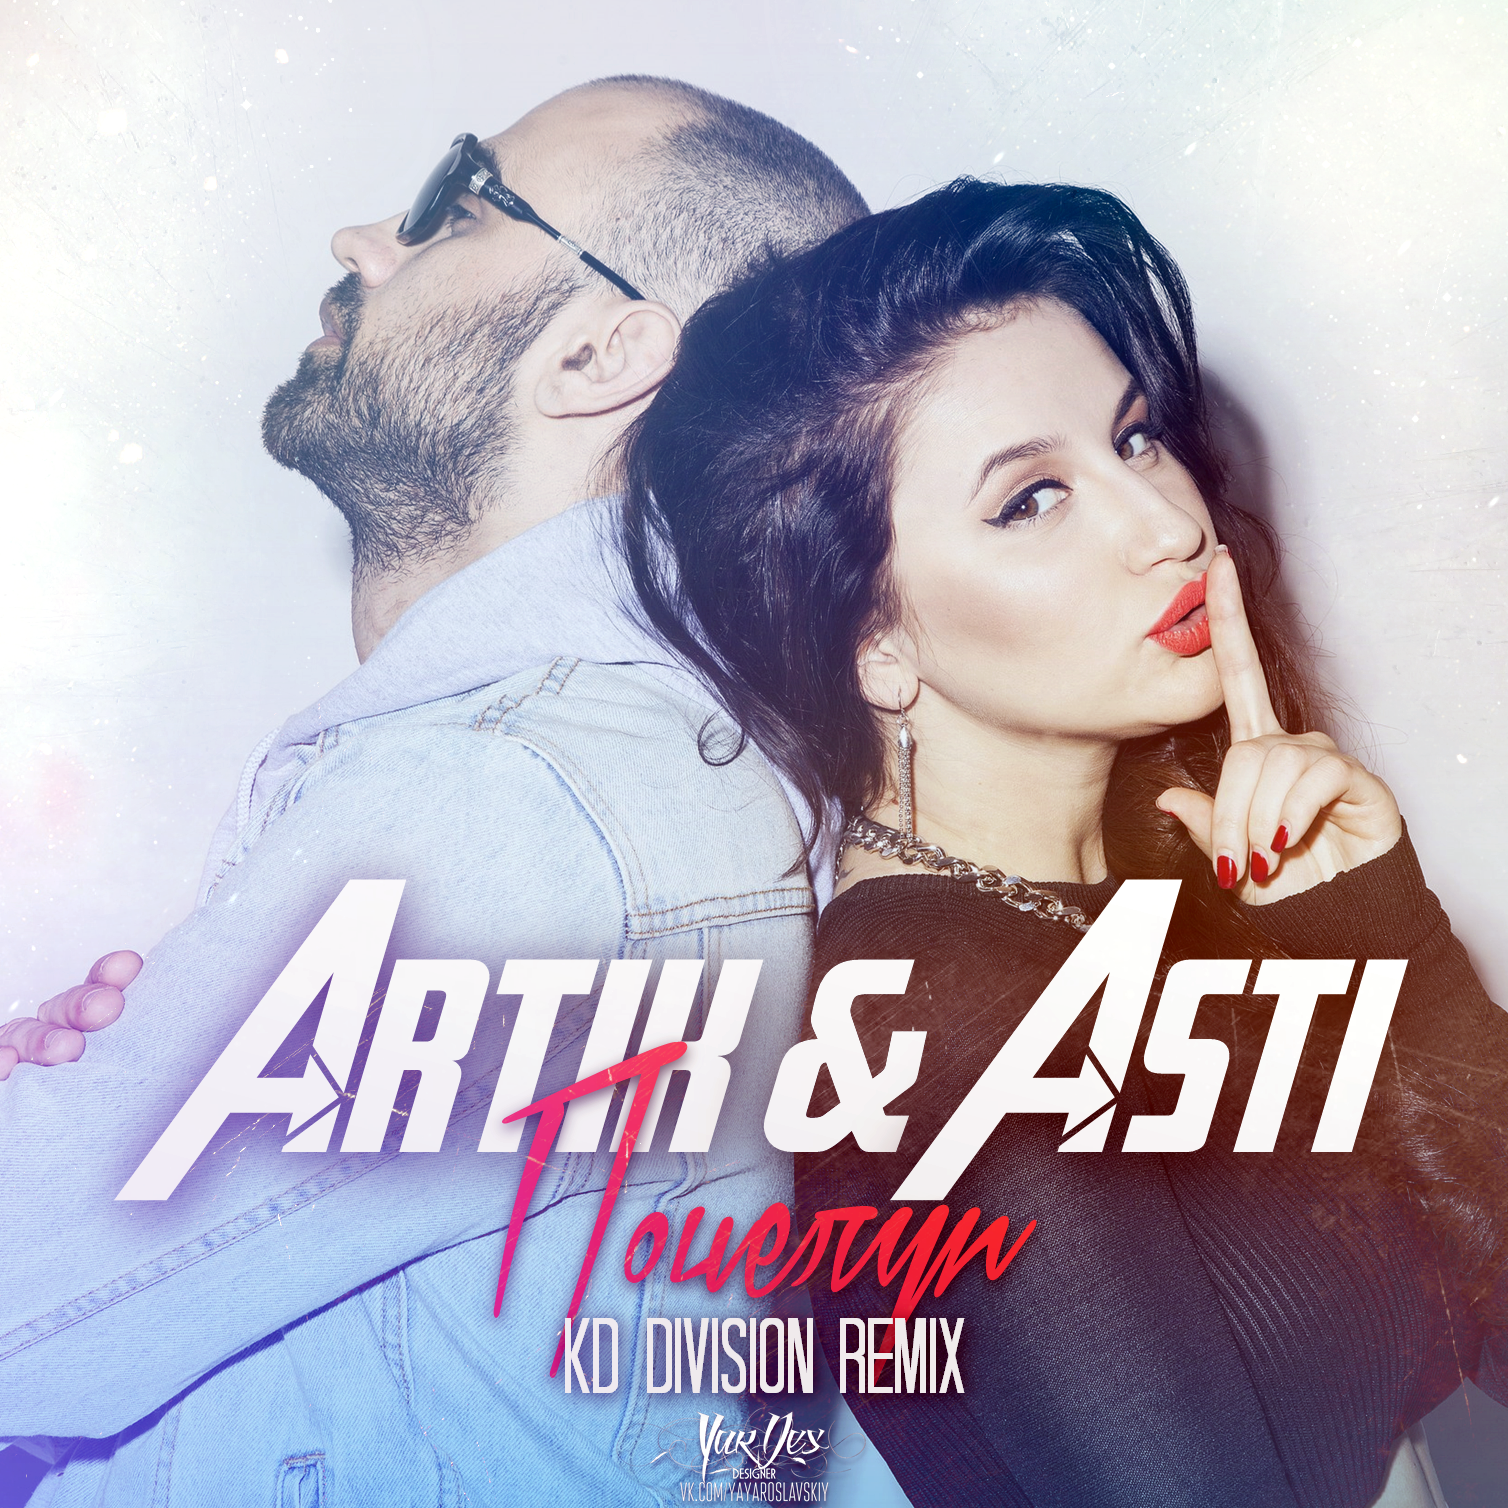 Мп3 песни асти. Группа artik & Asti. Группа artik & Asti альбомы. Artik Asti обложка. Артик и Асти 2015 год.